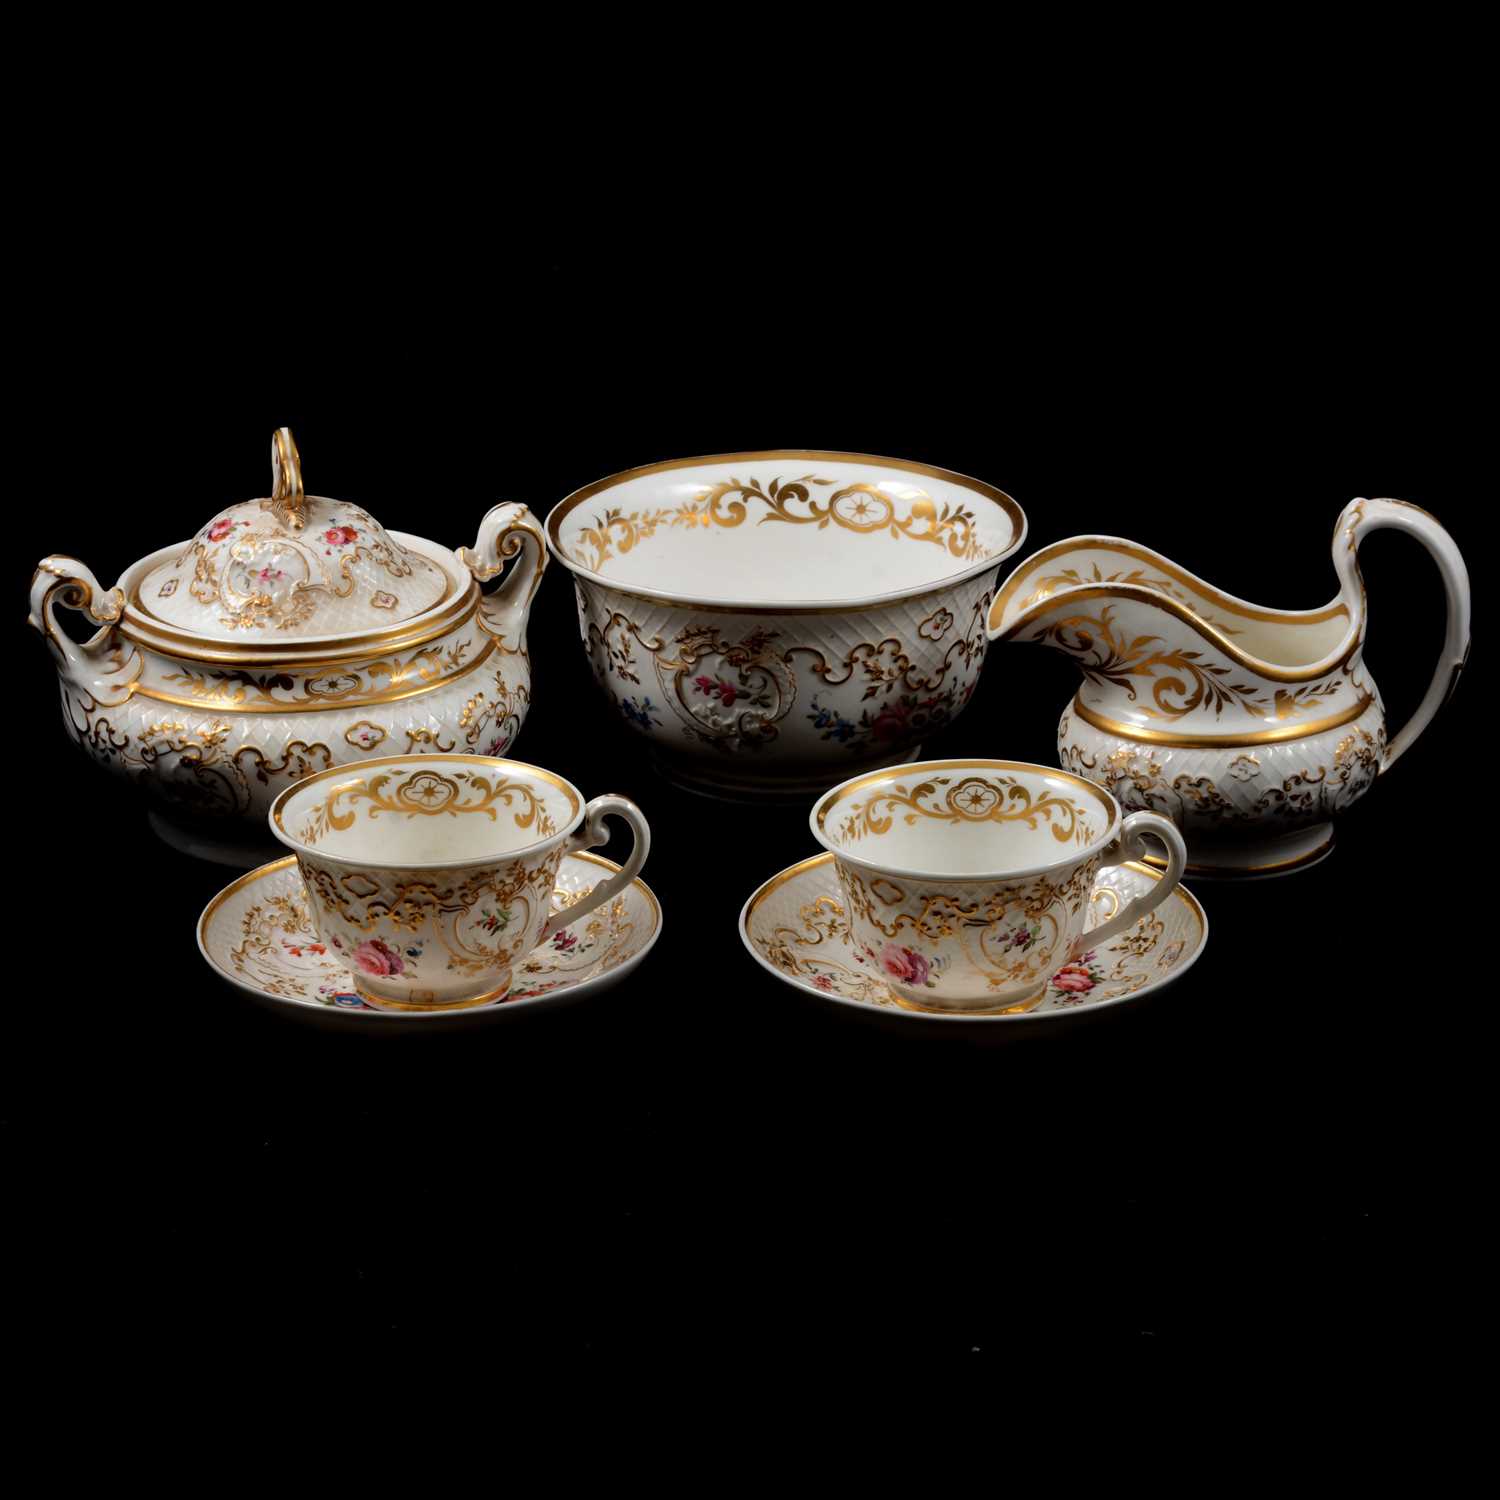 English bone china tea set, possibly Daniels, circa.1830, floral decoration, no.2/824. Condition